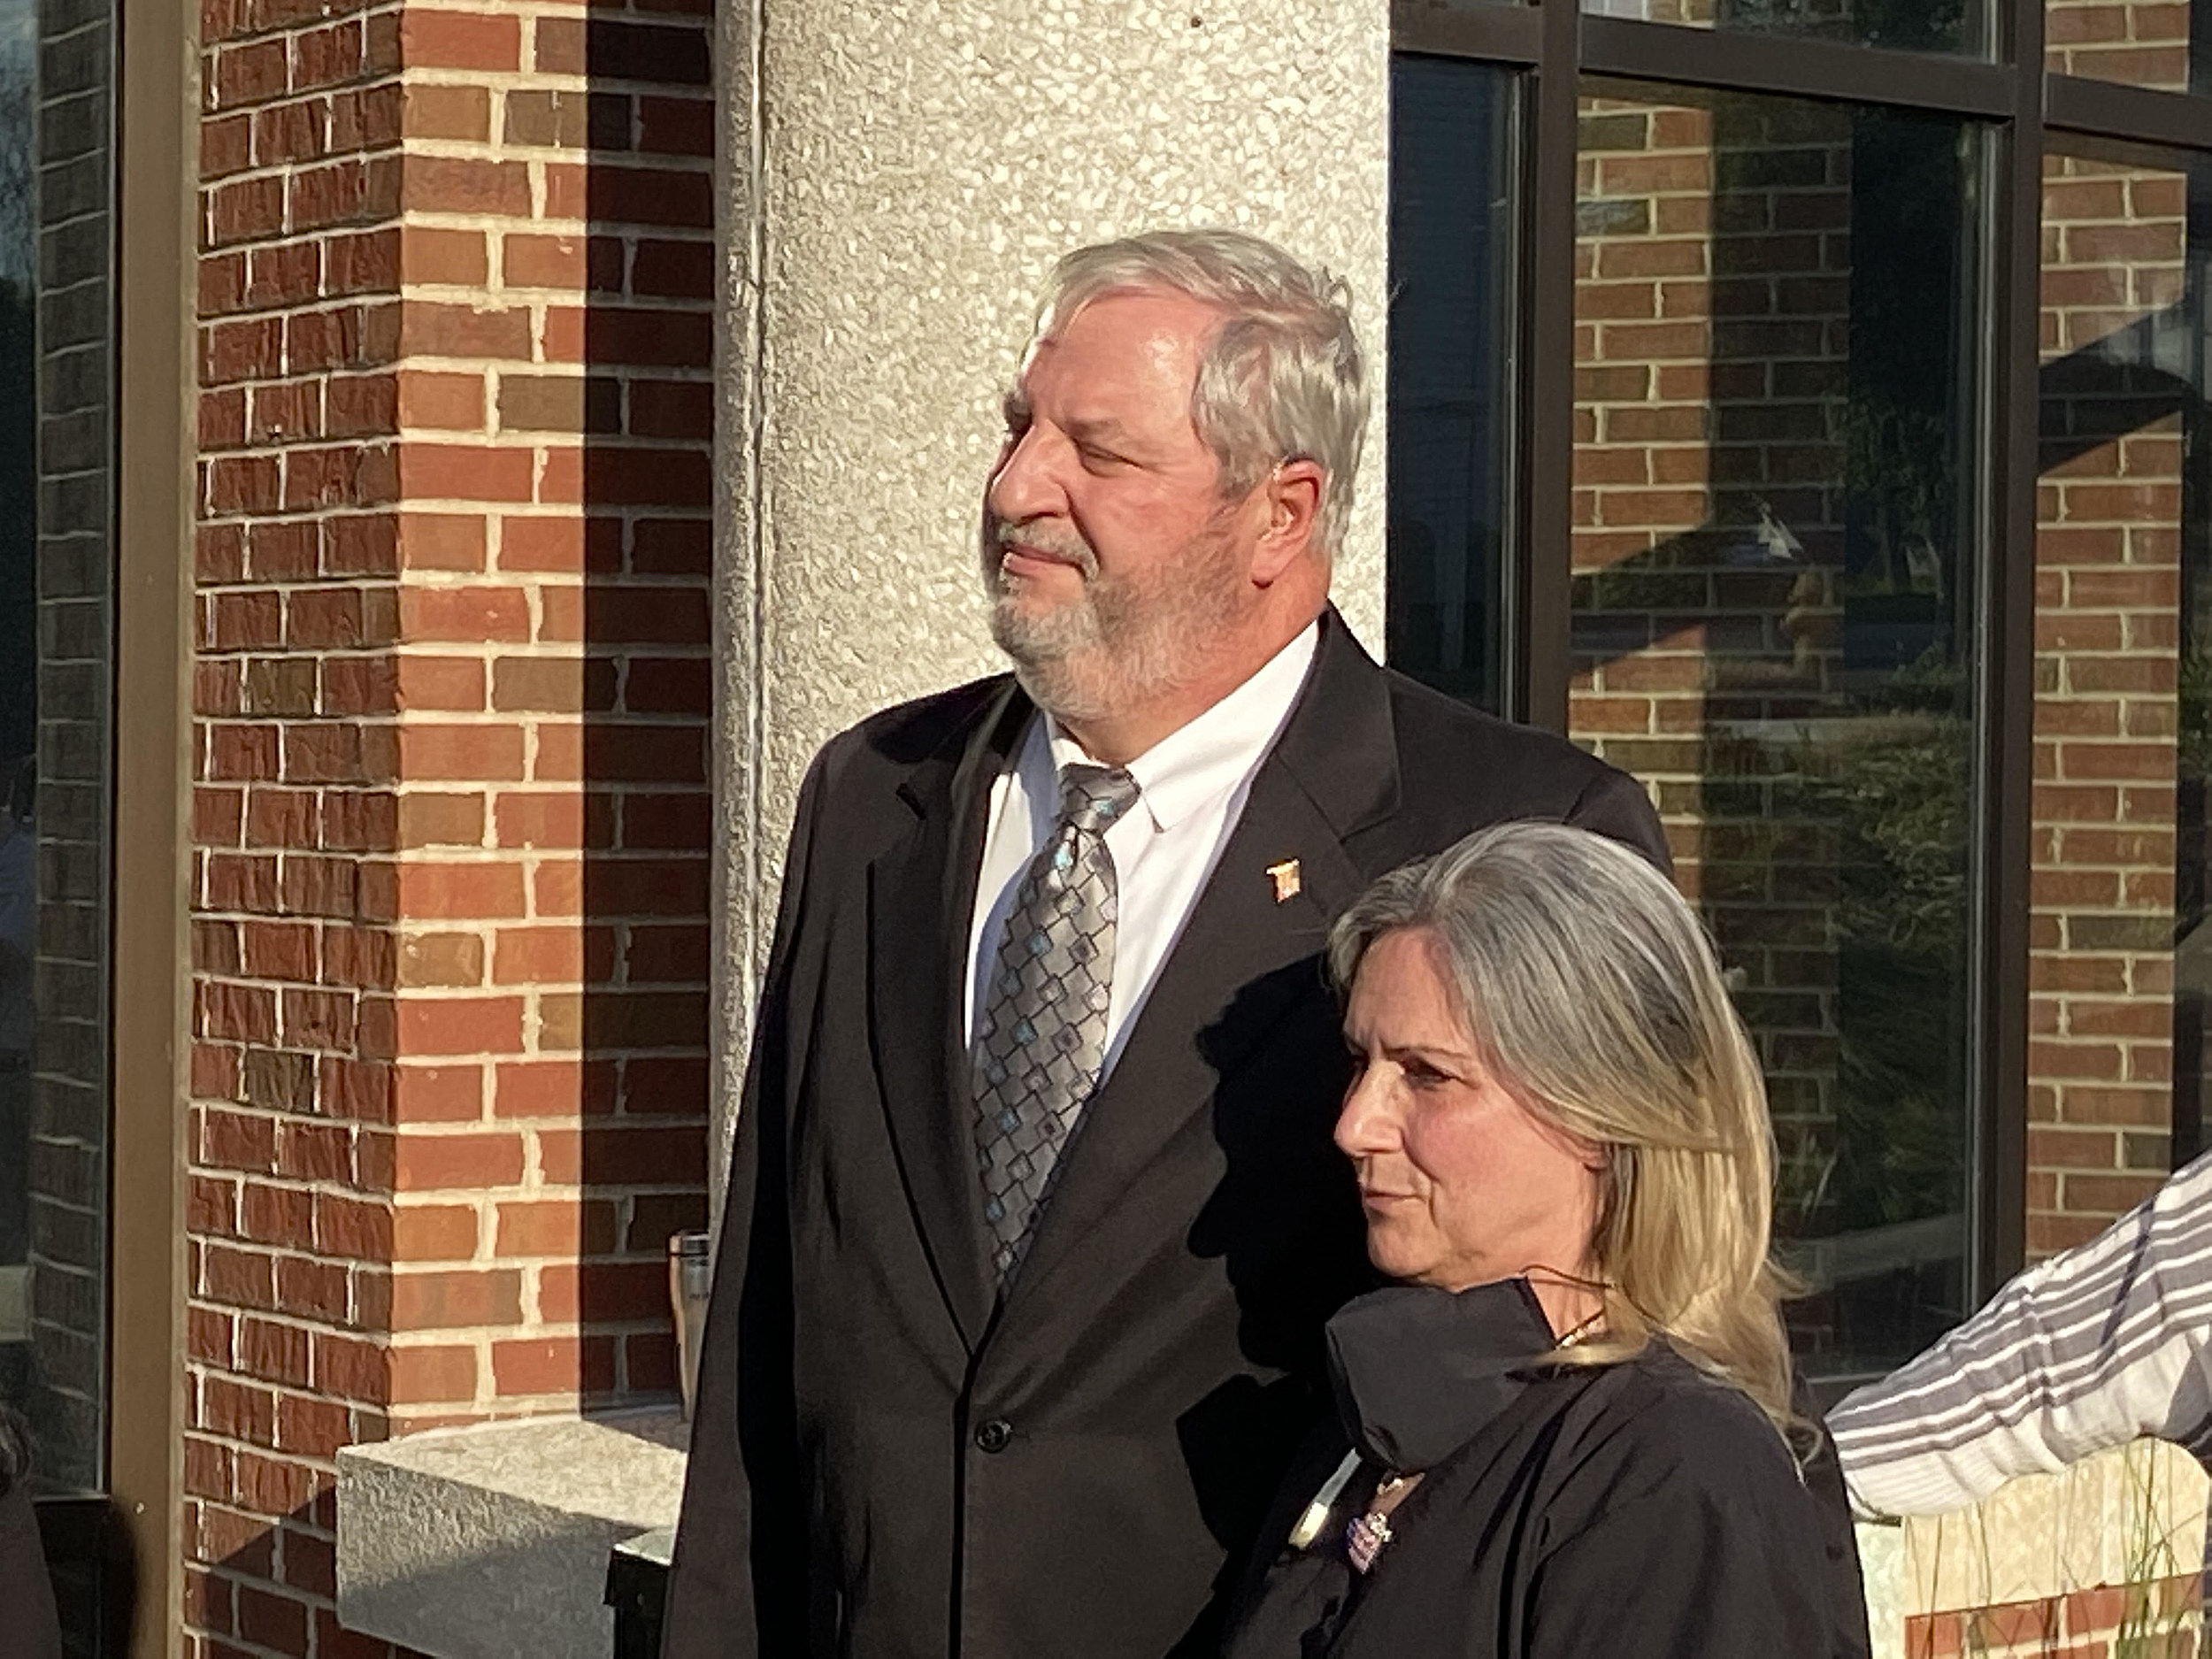 A True Leader, Danbury Mayor Joe Cavo Reflects on City Hall Term